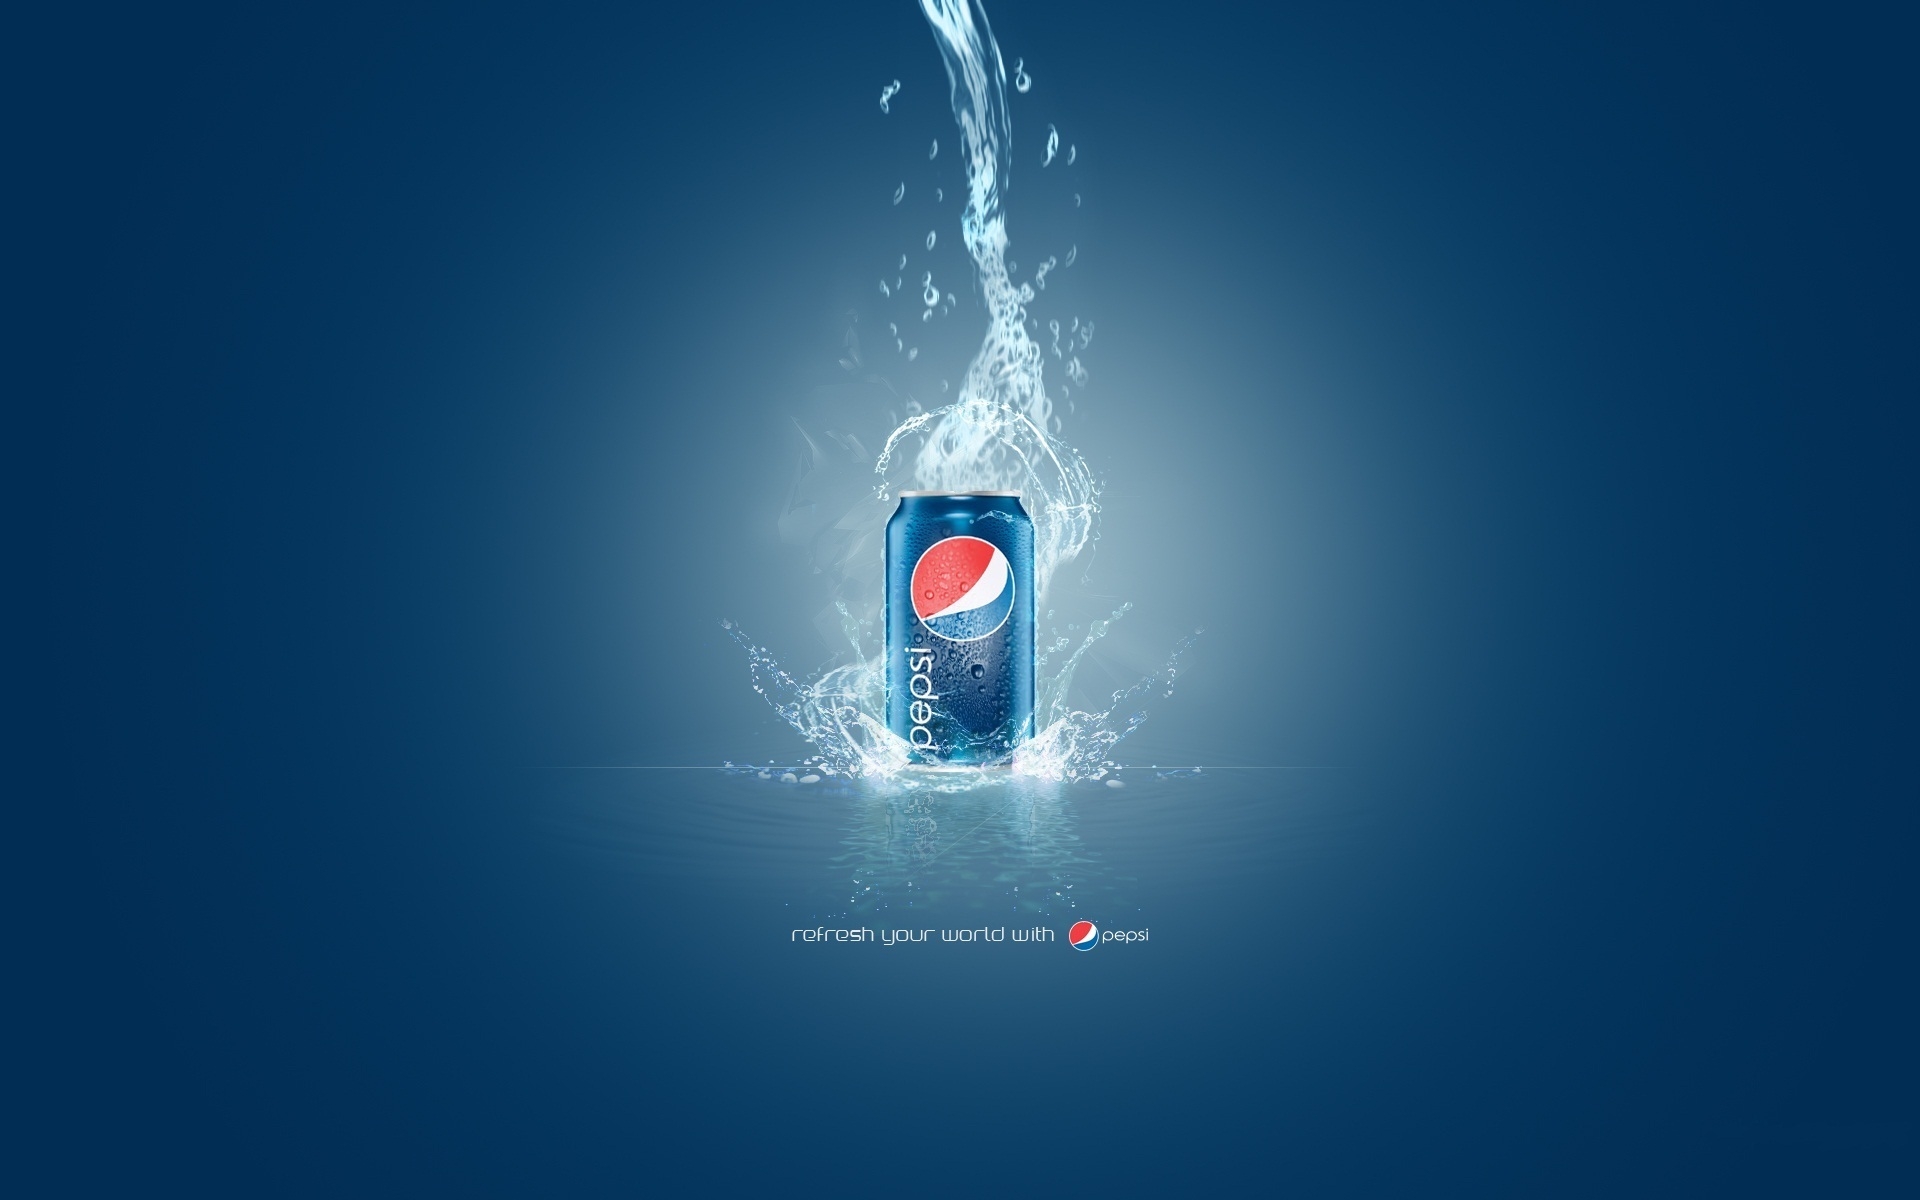 Картинки Pepsi, стиль, пить бренд, знак, логотип, банк, вода, капли, фраза, слово фото и обои на рабочий стол